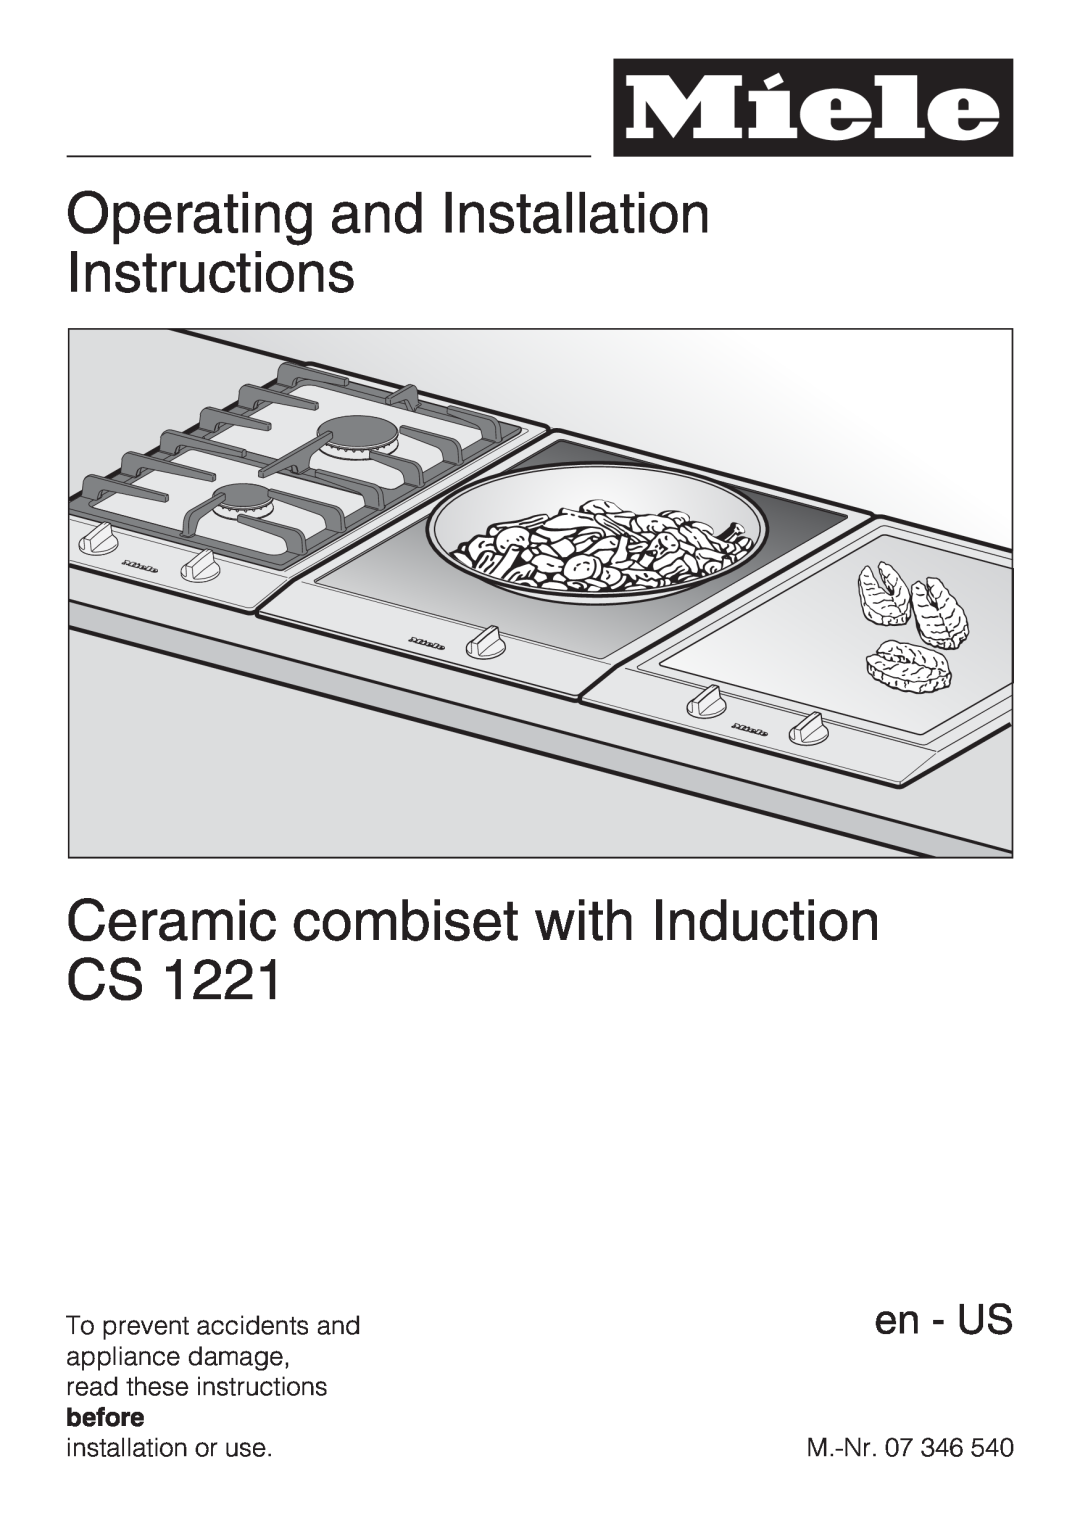 Miele CS 1221 installation instructions Operating and Installation Instructions, Ceramic combiset with Induction CS 